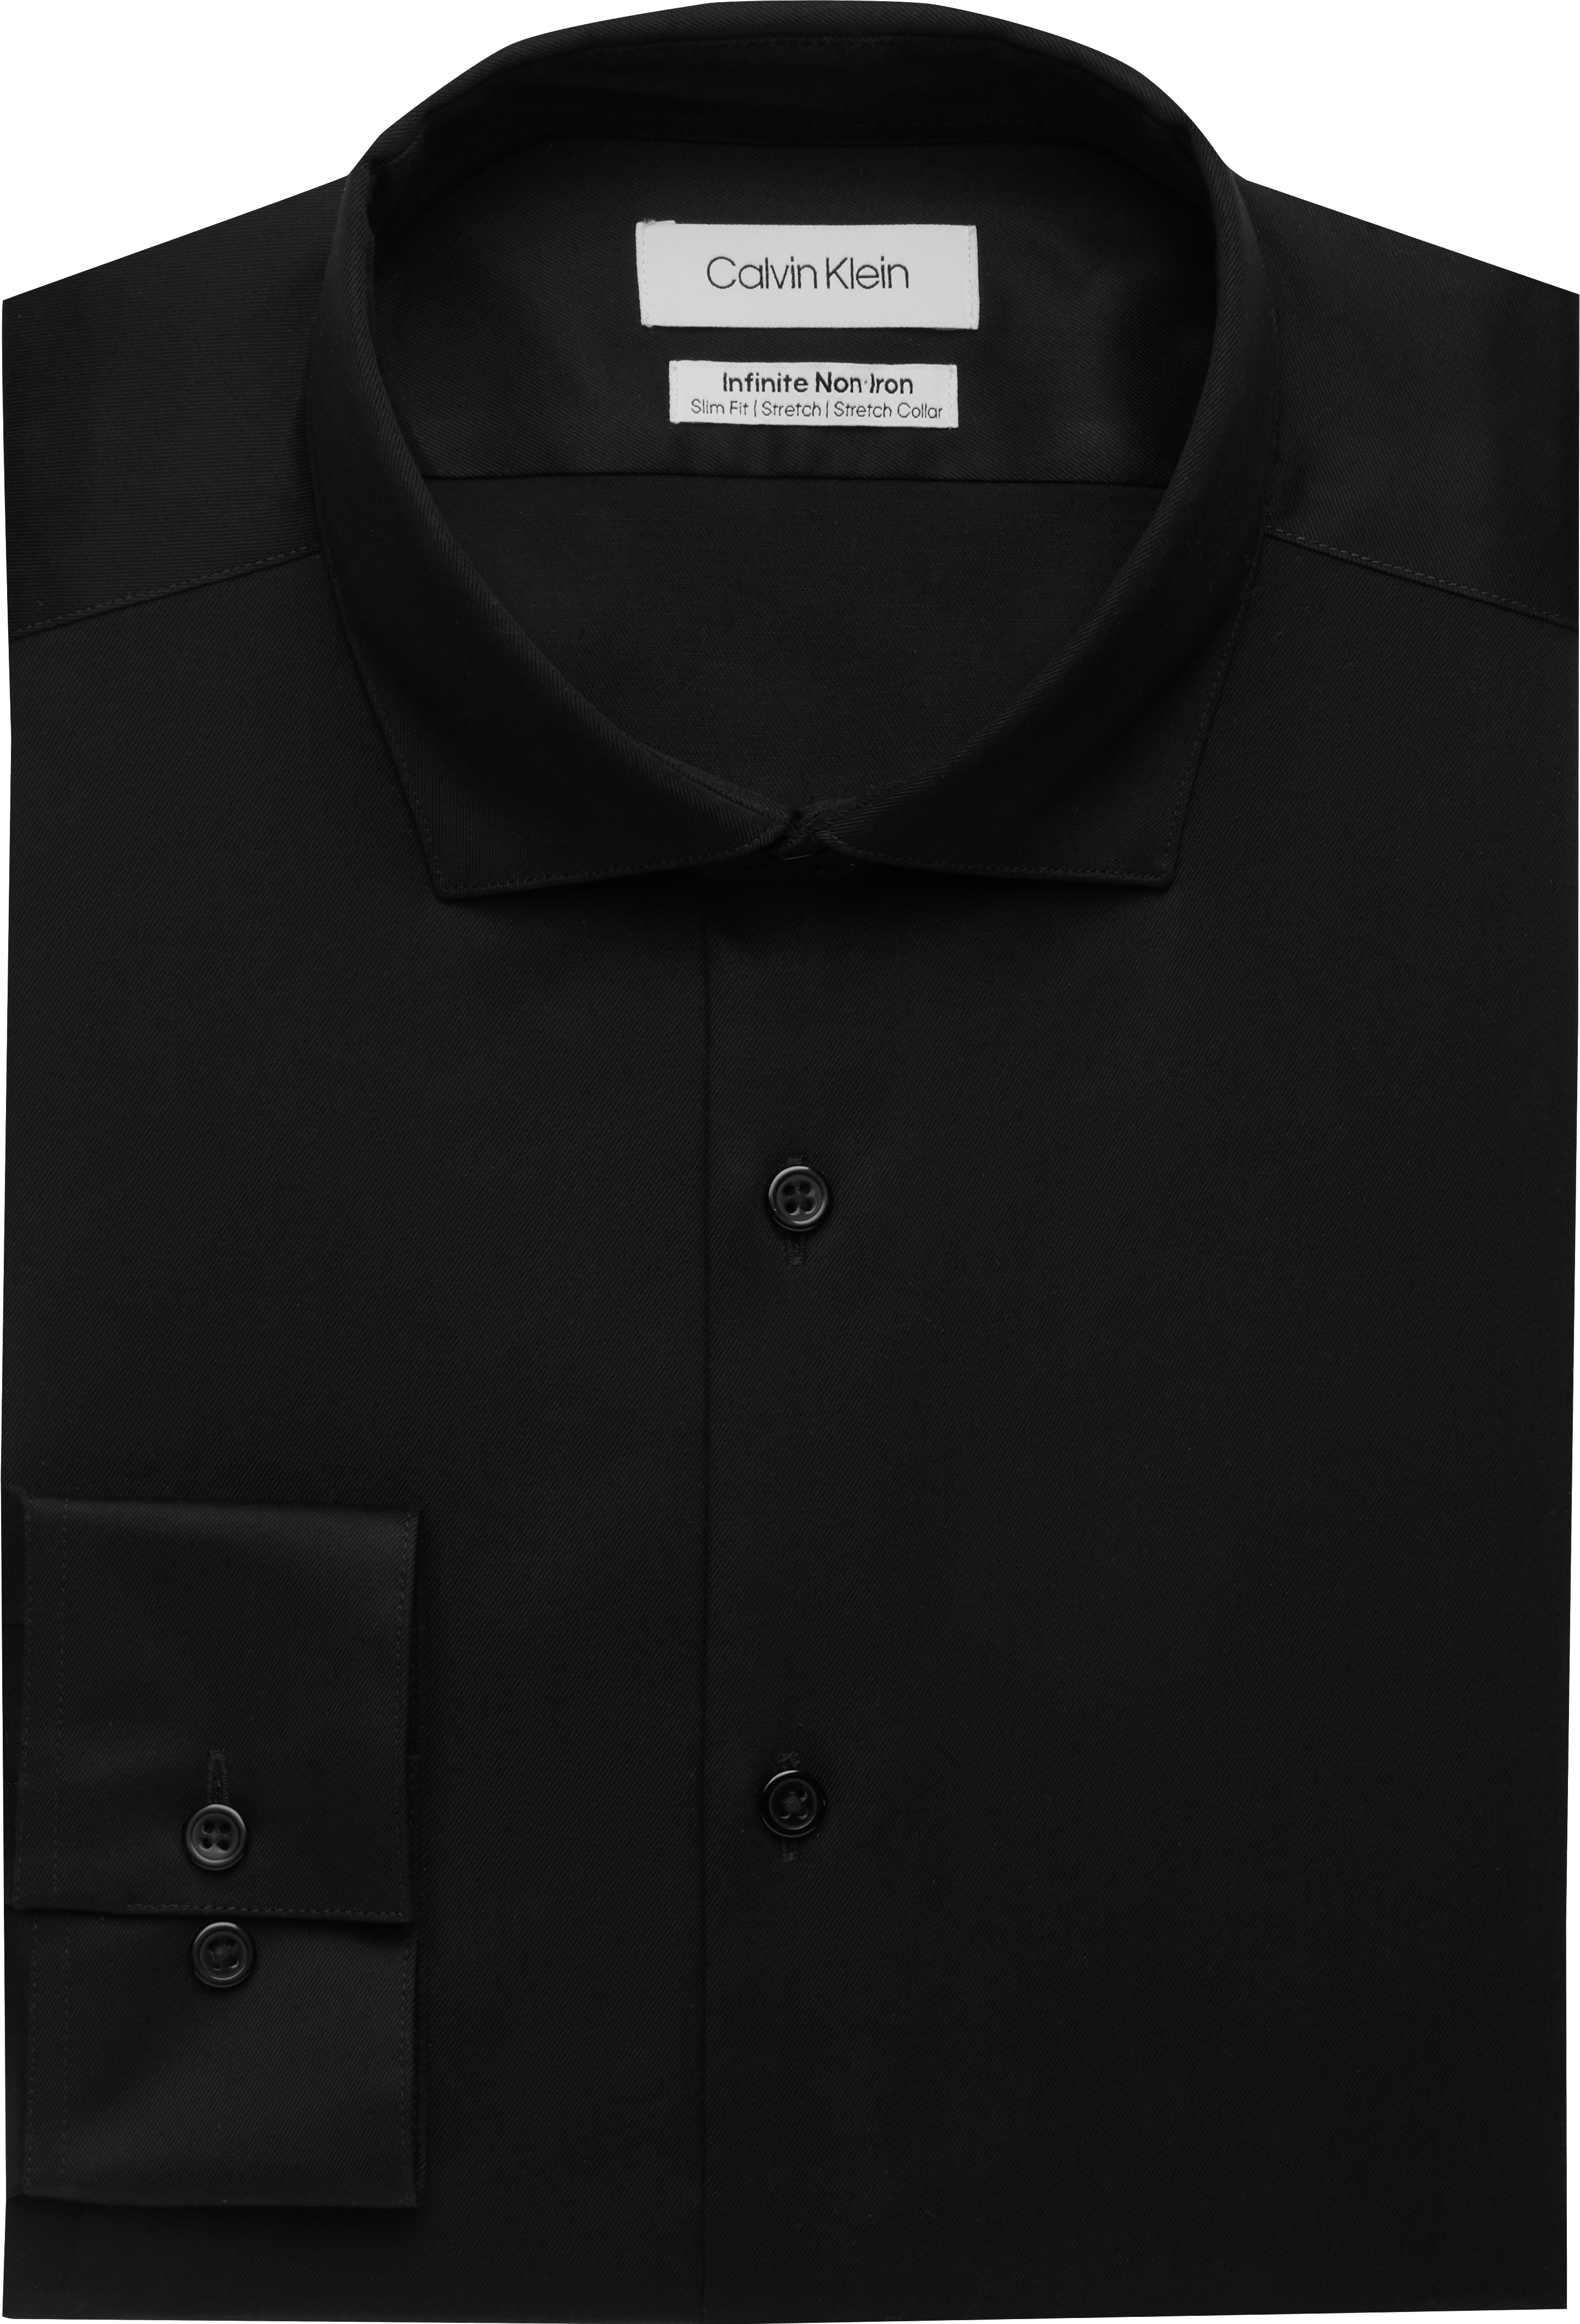 Calvin Klein Infinite Non-Iron Black Slim Fit Stretch Dress Shirt - Men's  Shirts | Men's Wearhouse